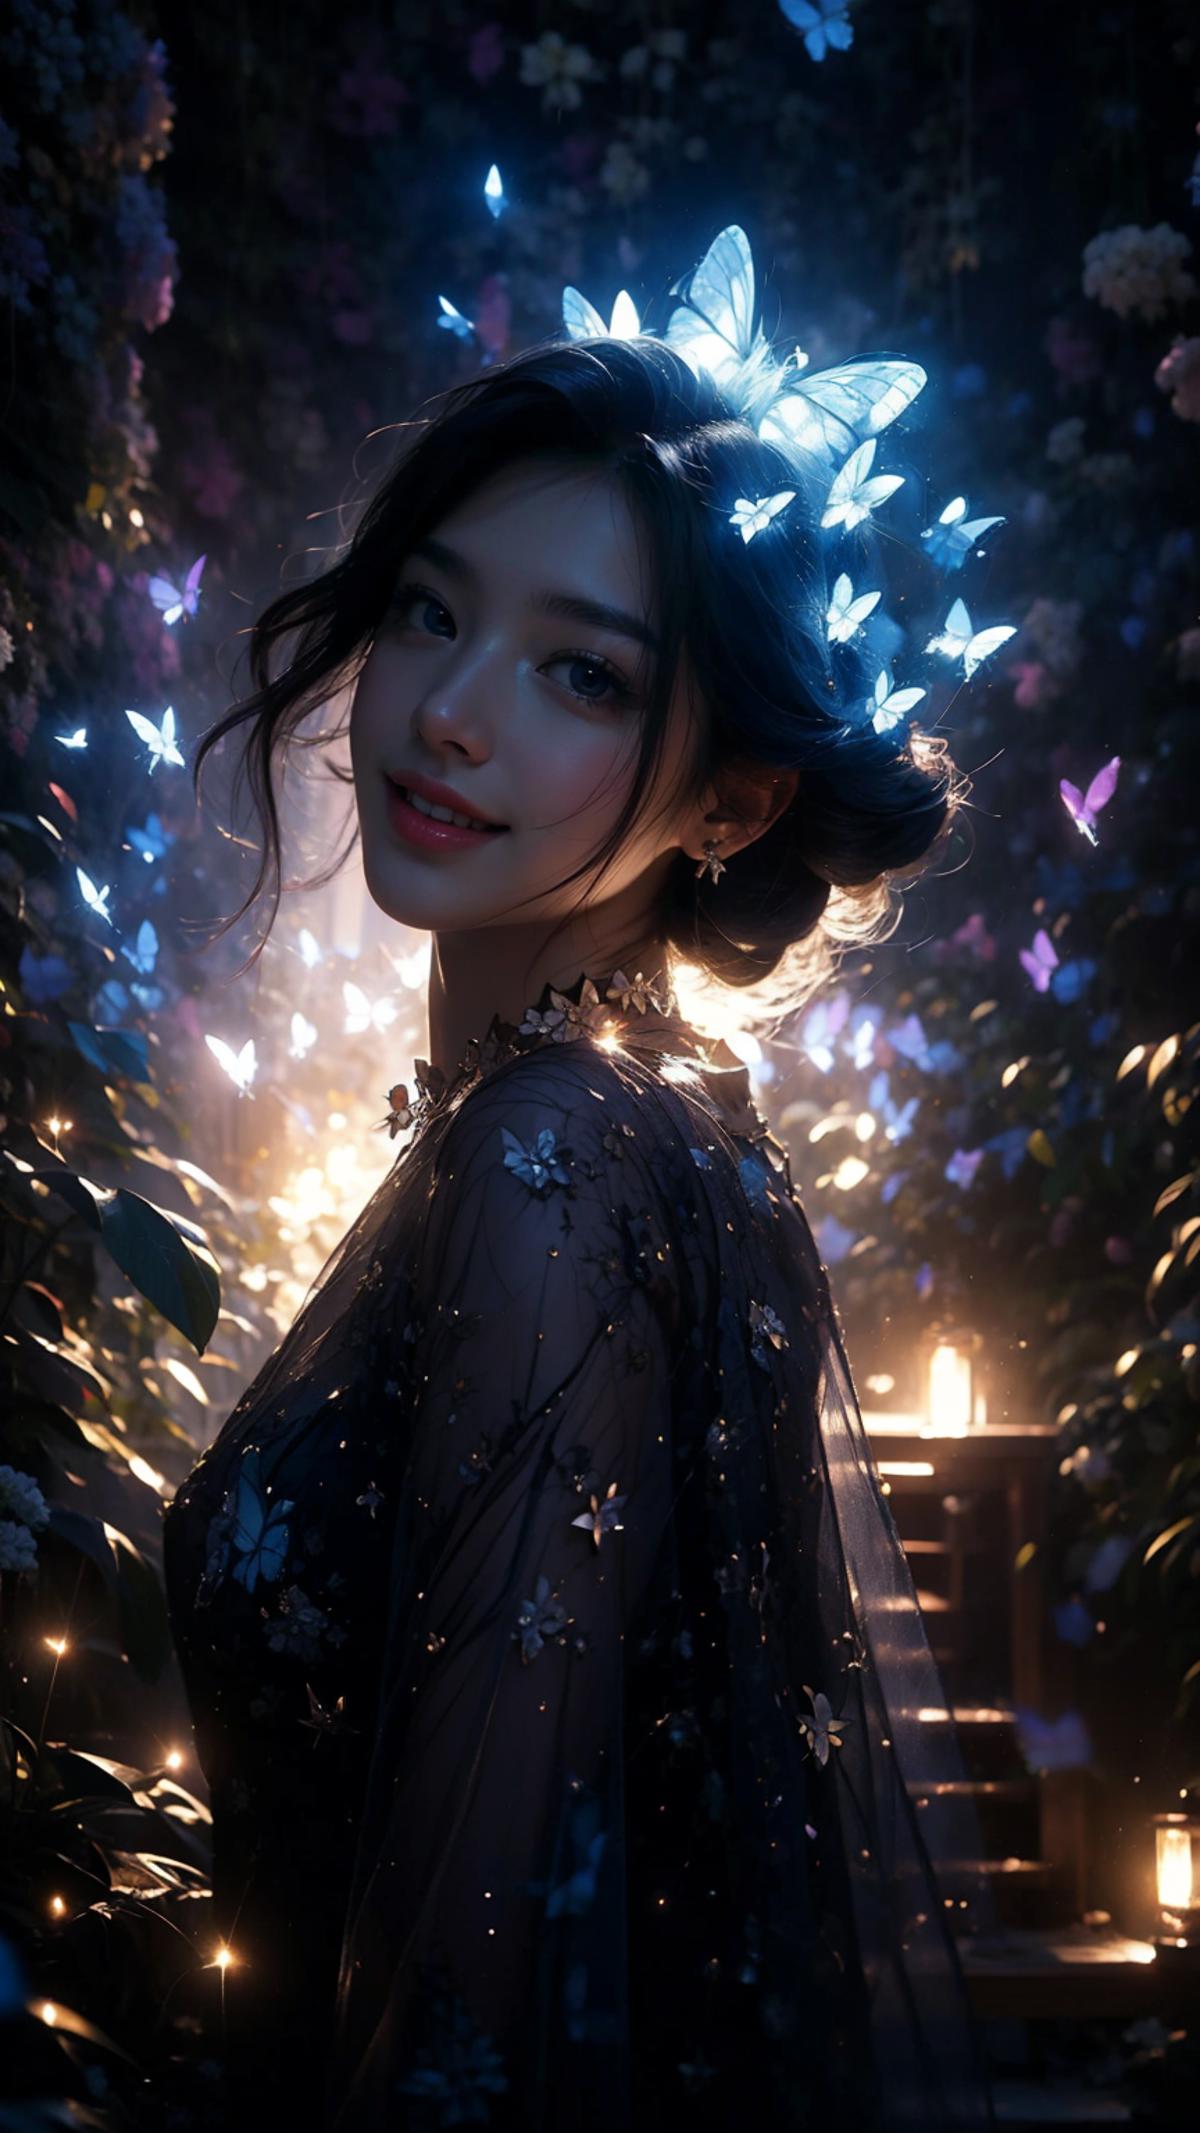 绪儿-夜蝶Night butterfly image by tonyhs